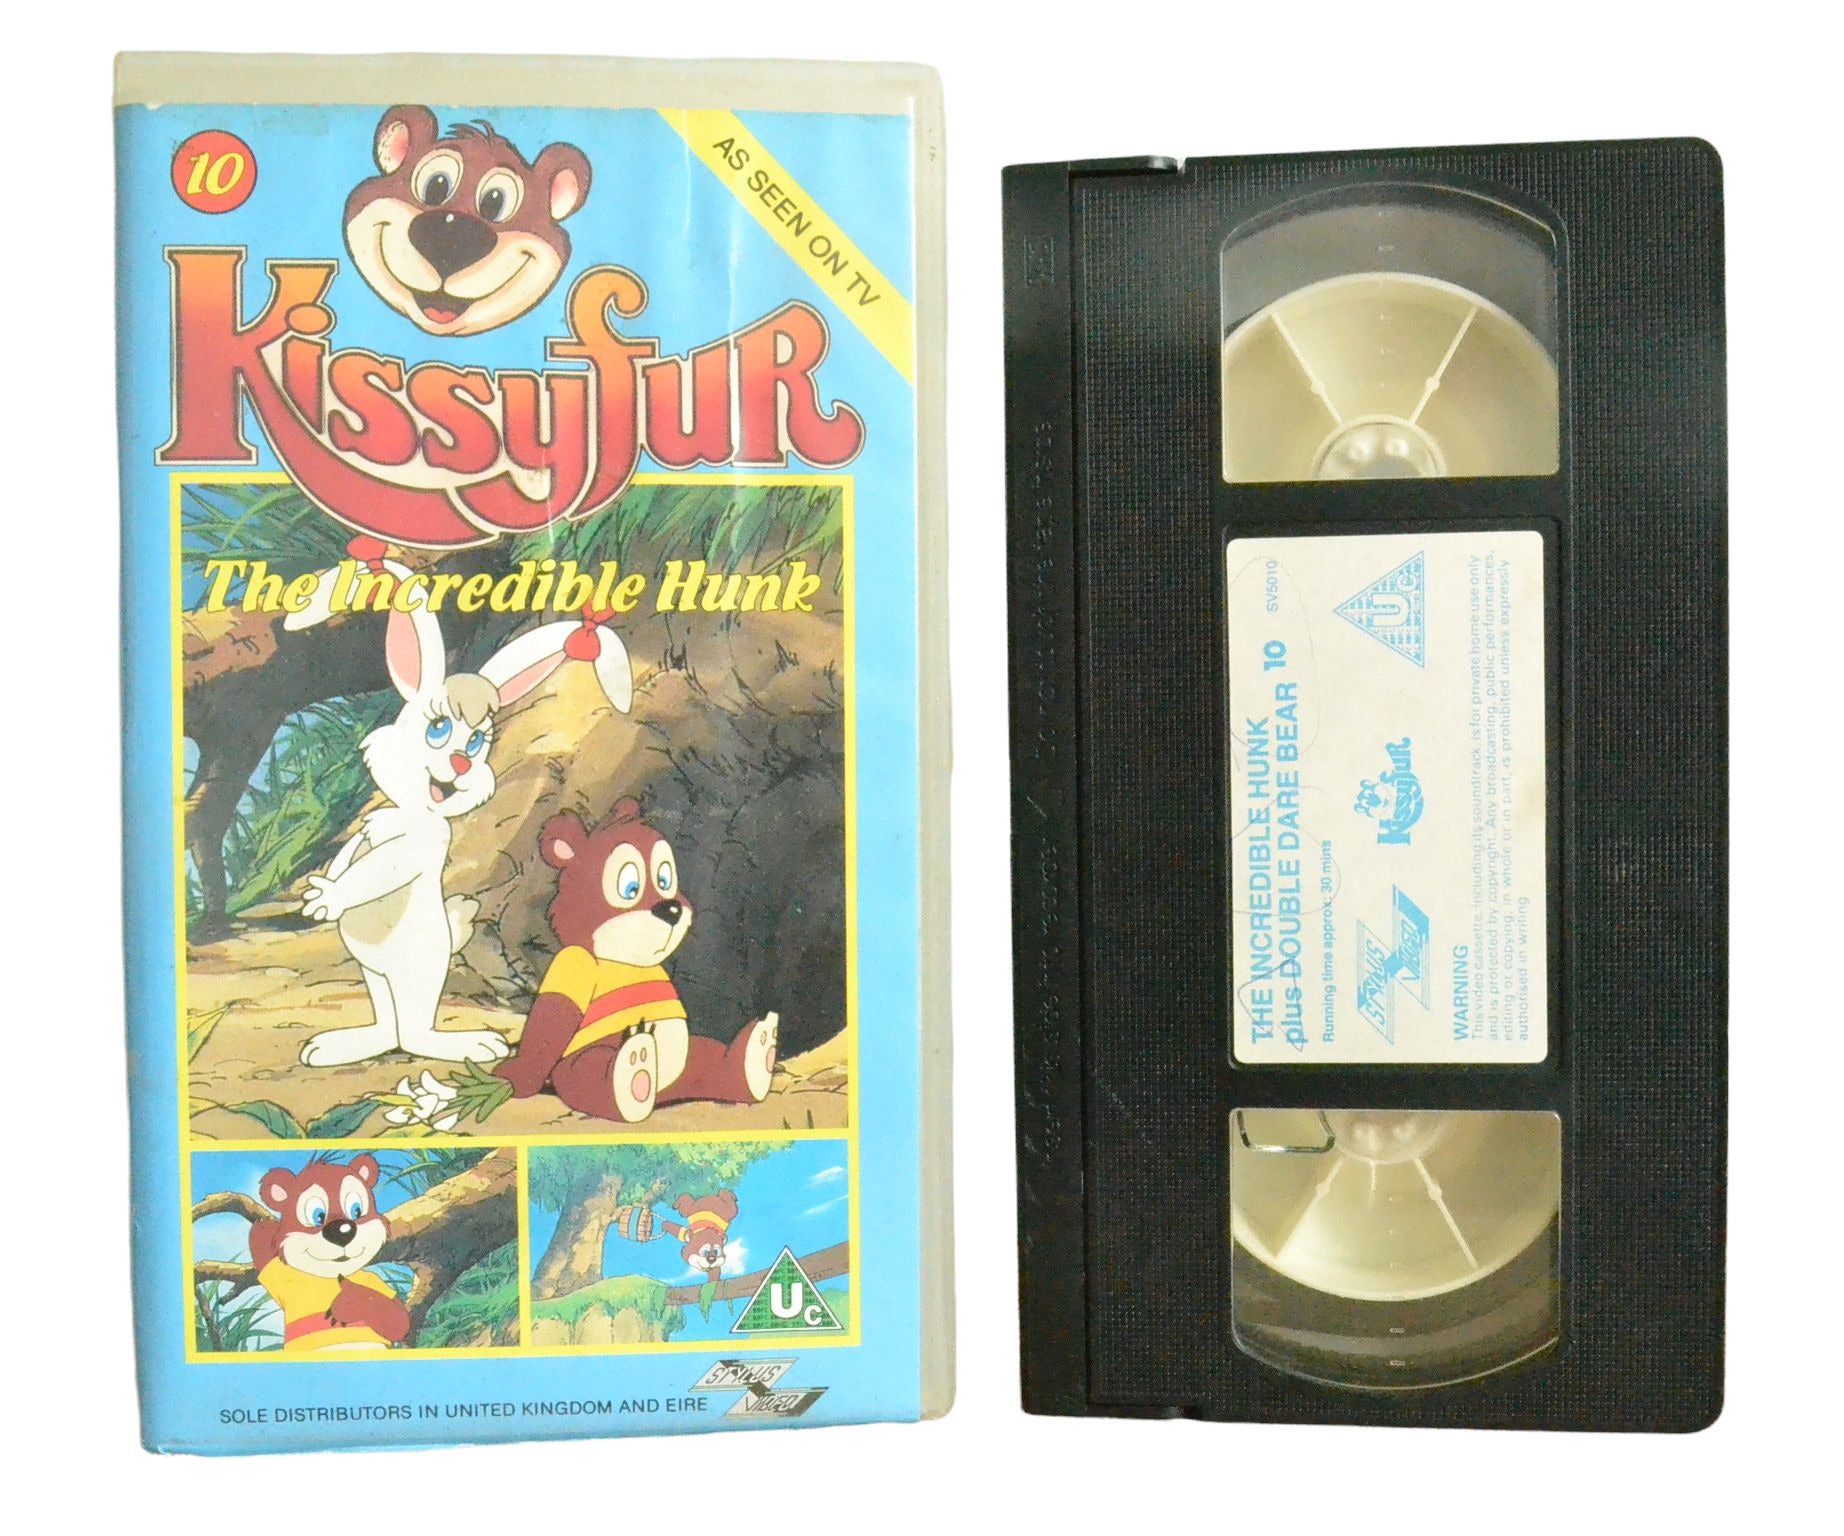 Kissyfur: The Incredible Hunk Plus Double Dare Bear - Stylus Video - Children's - Pal VHS-